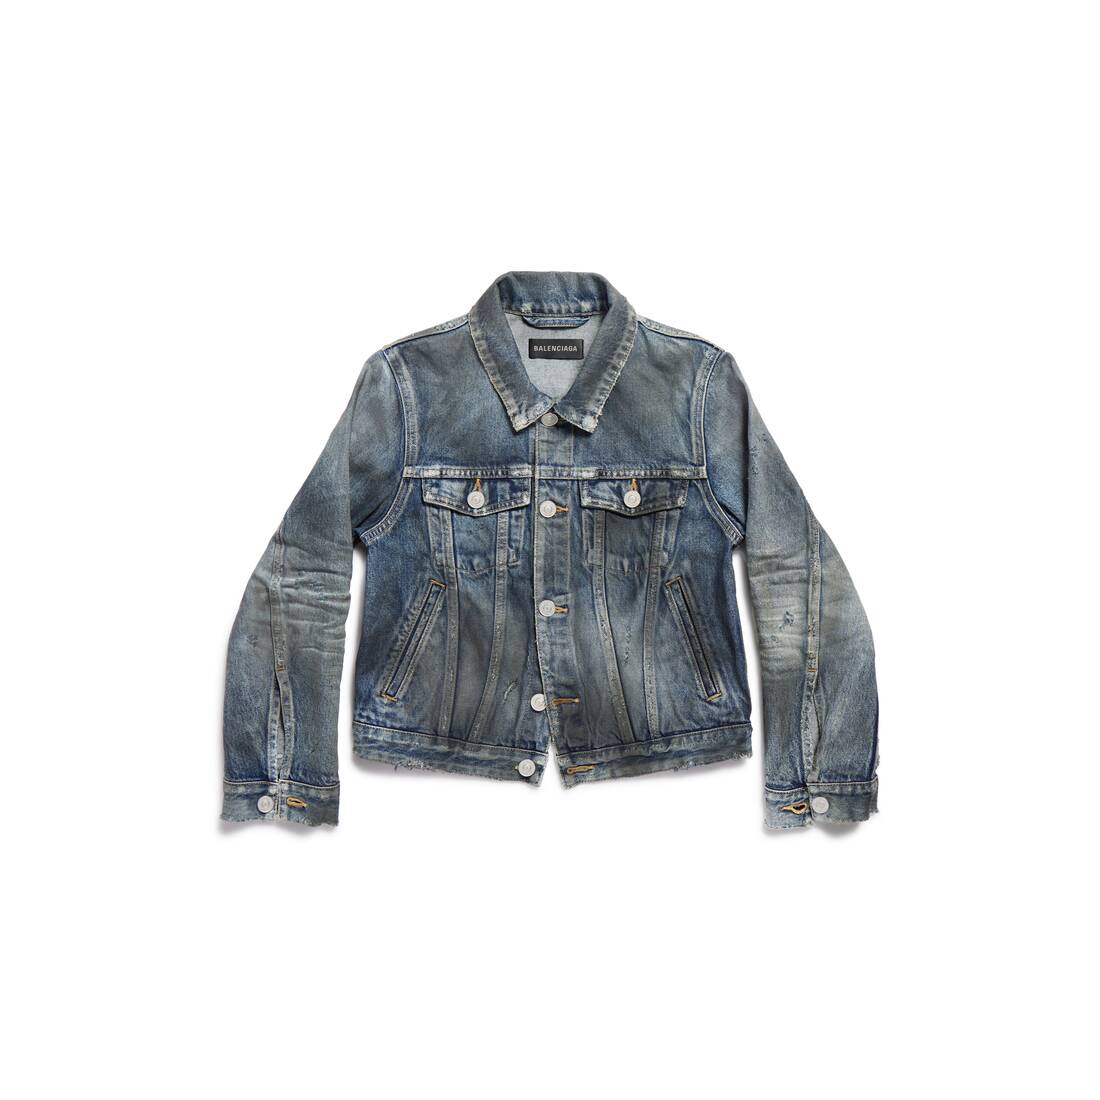 Discover 160+ balenciaga chest logo denim jacket latest